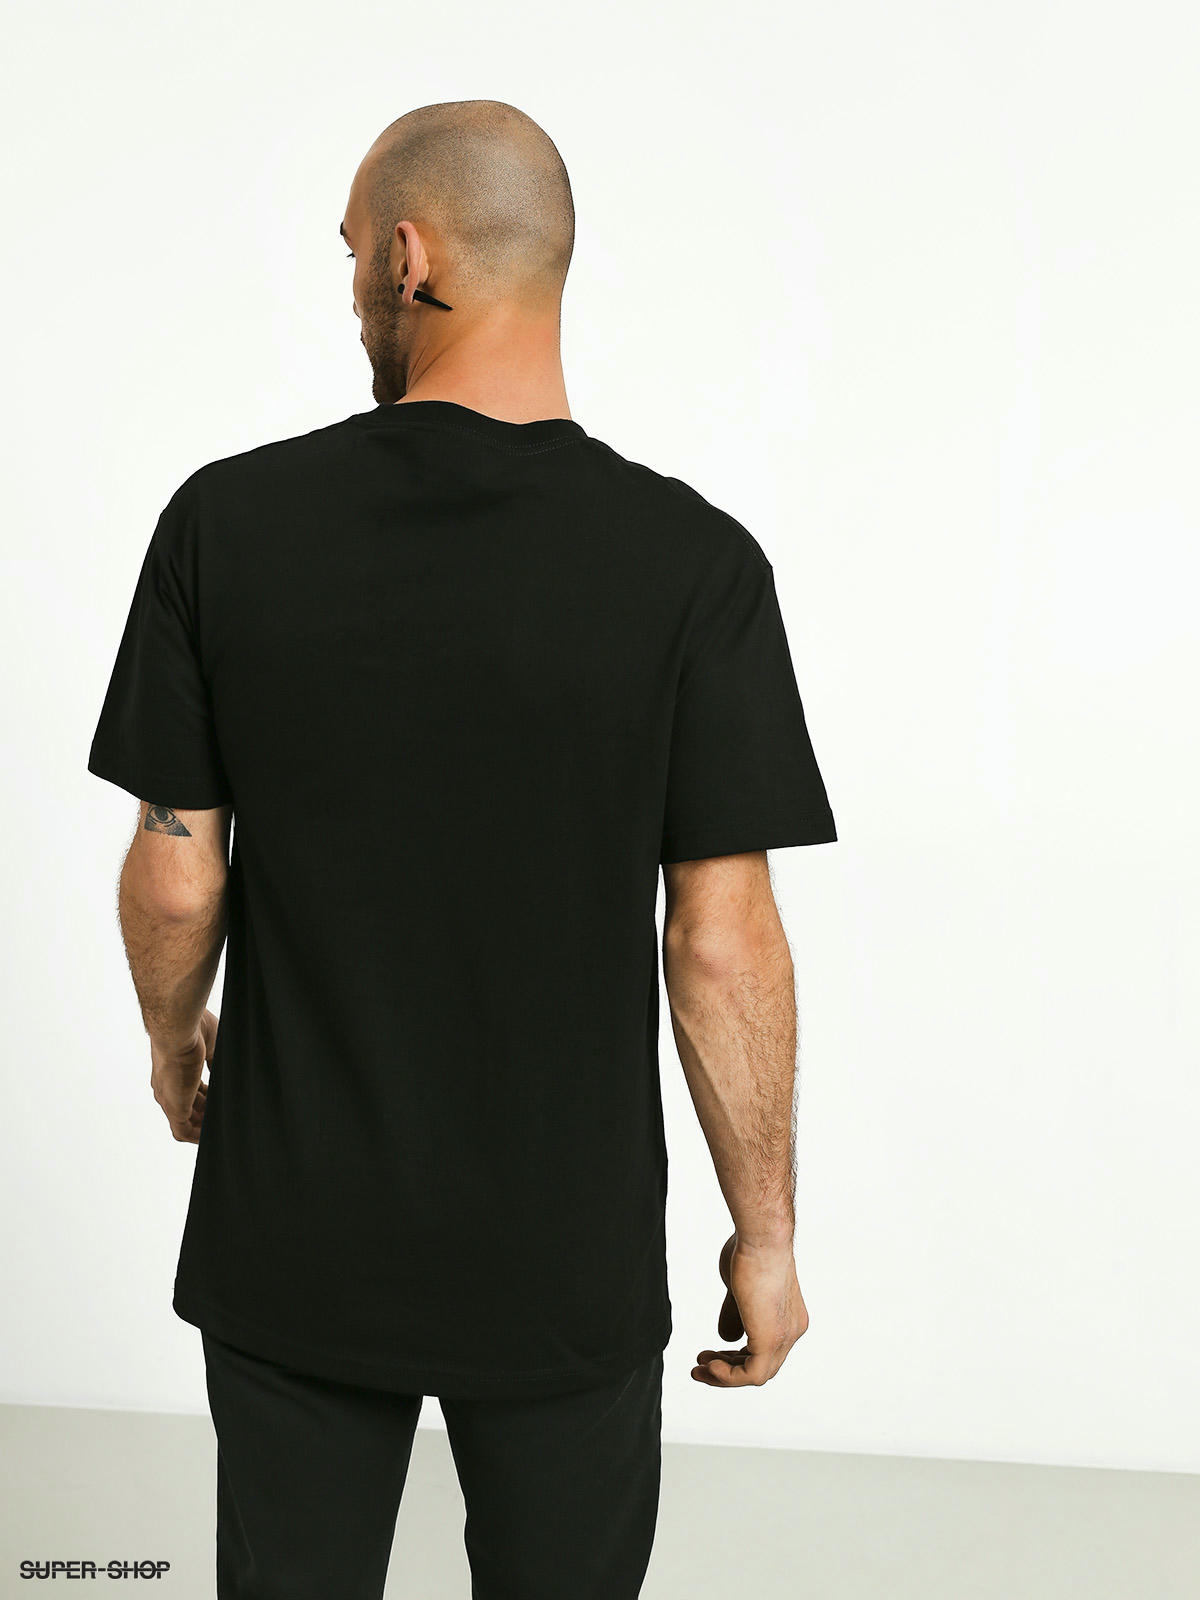 DGK Men's Last Crush Short Sleeve T Shirt Black Clothing Apparel Tees 